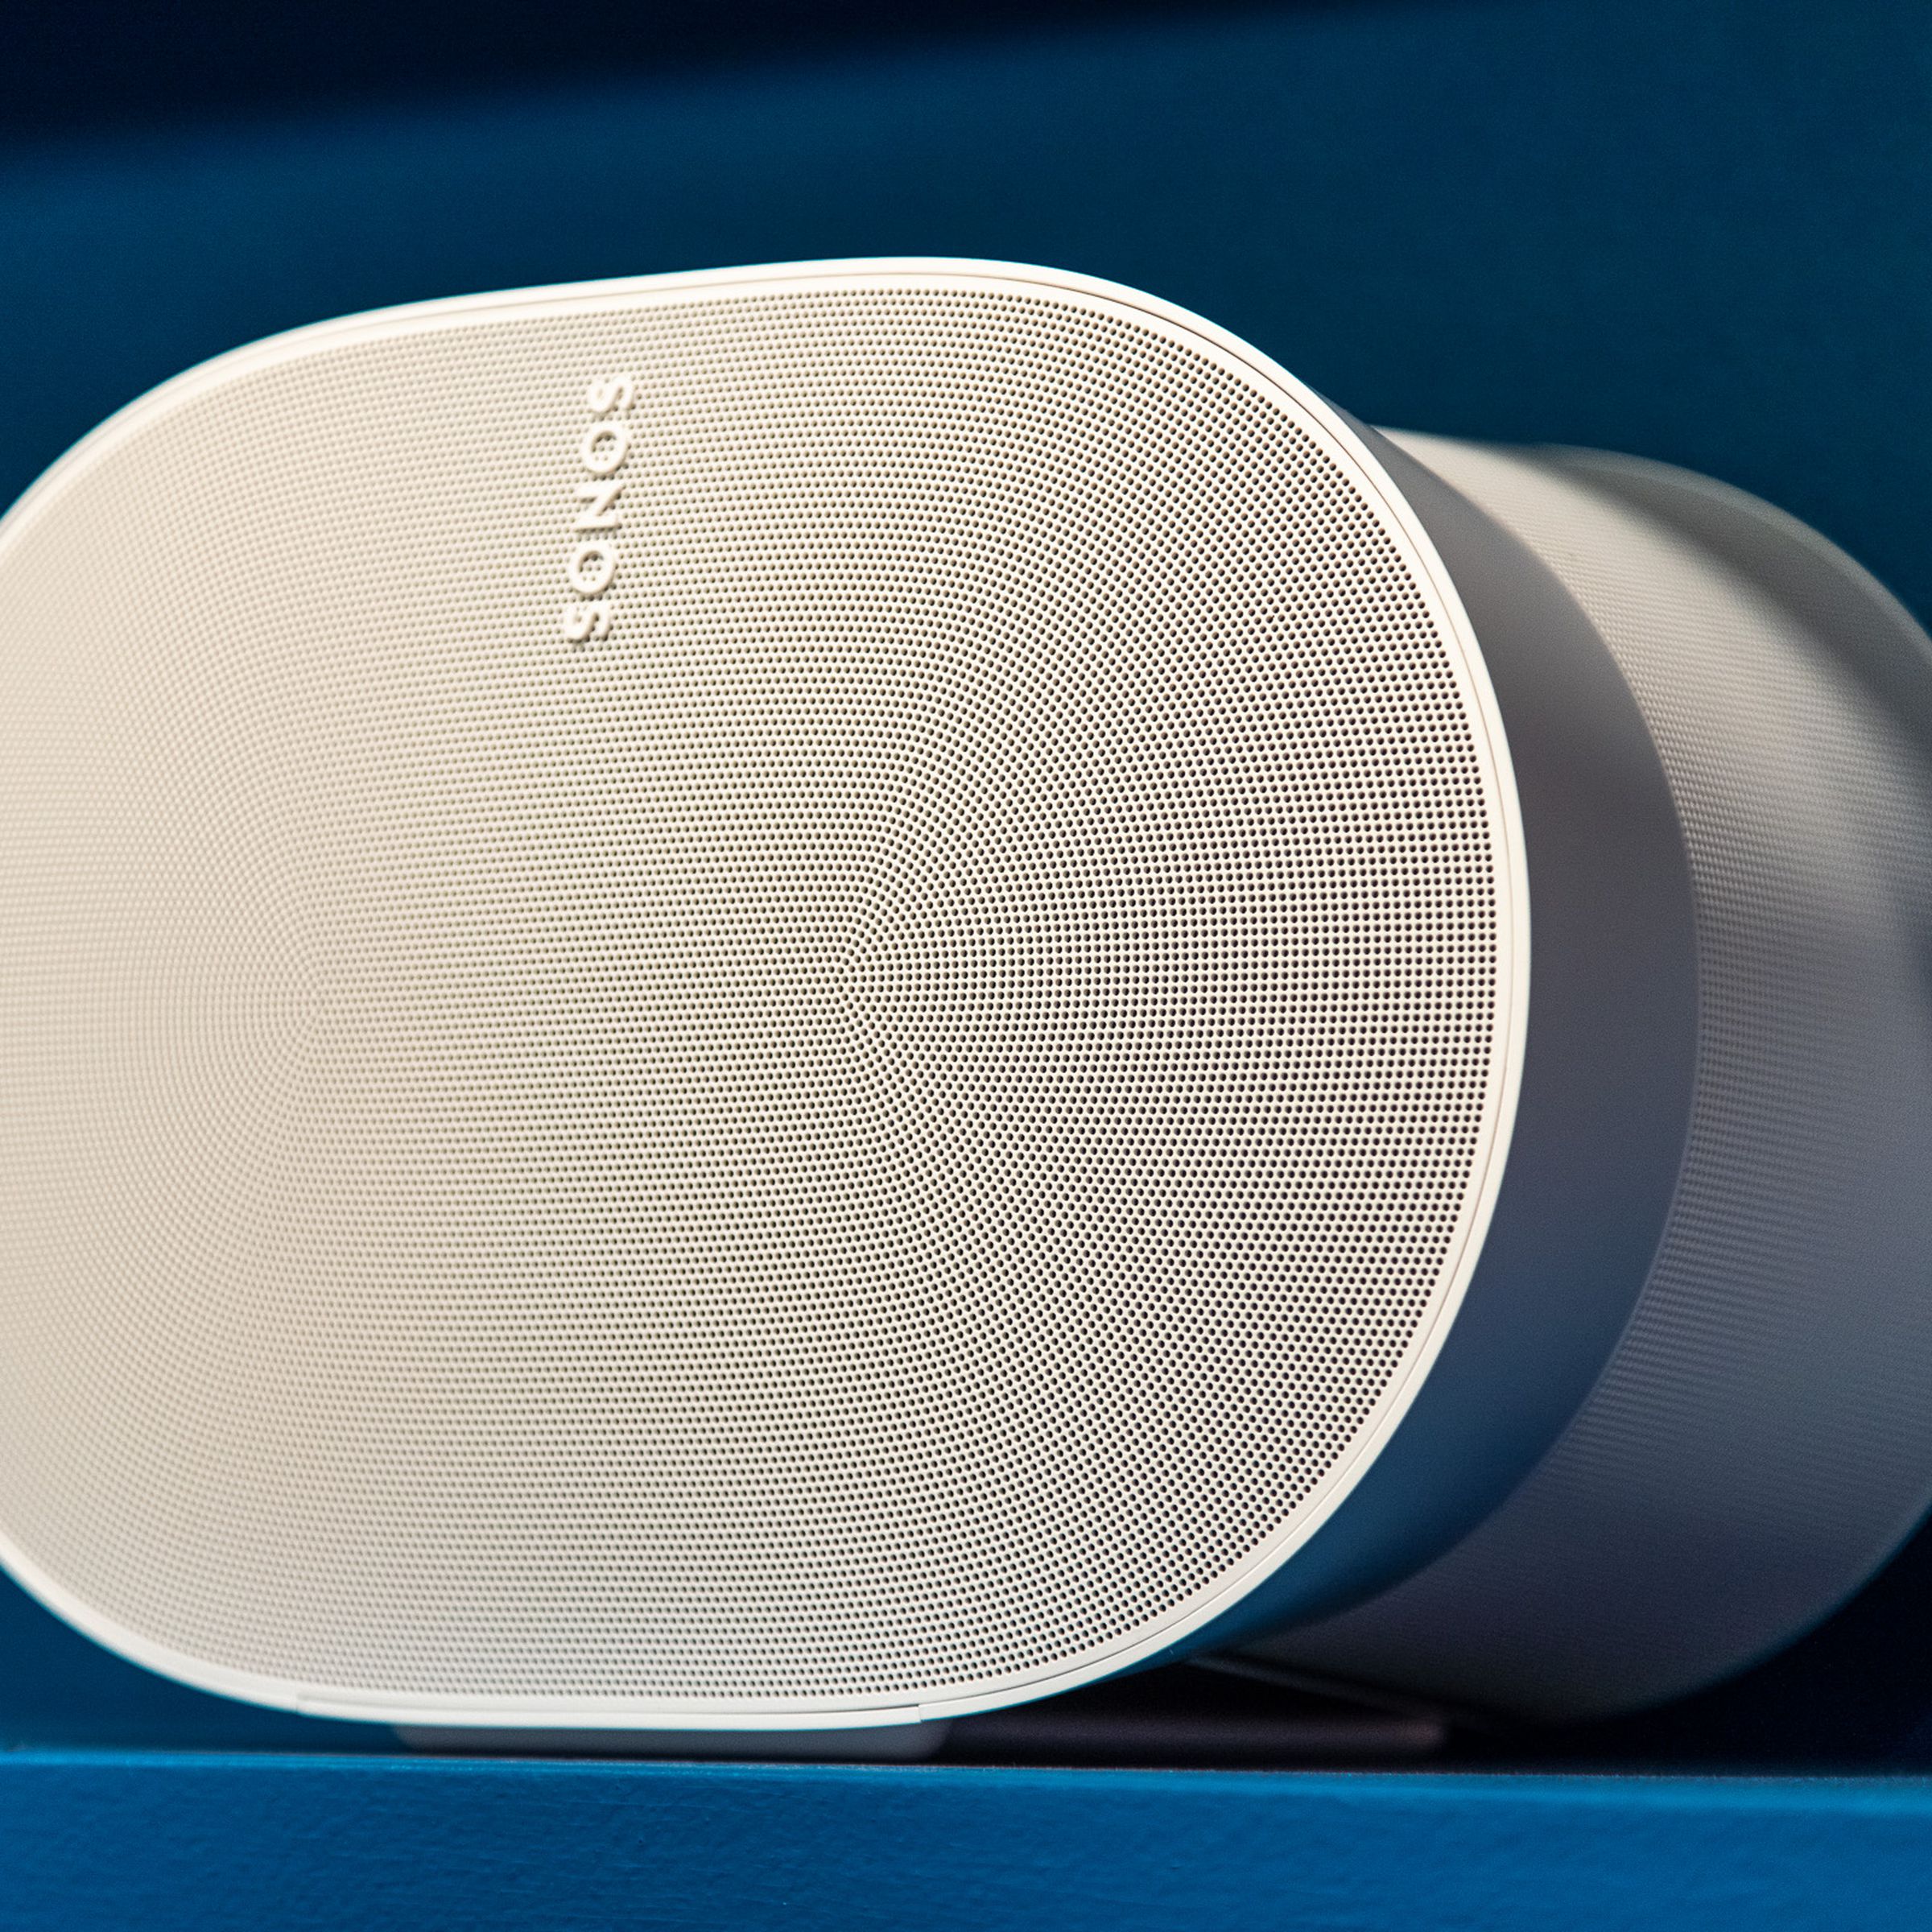 A photo of Sonos’ Era 300 speaker.